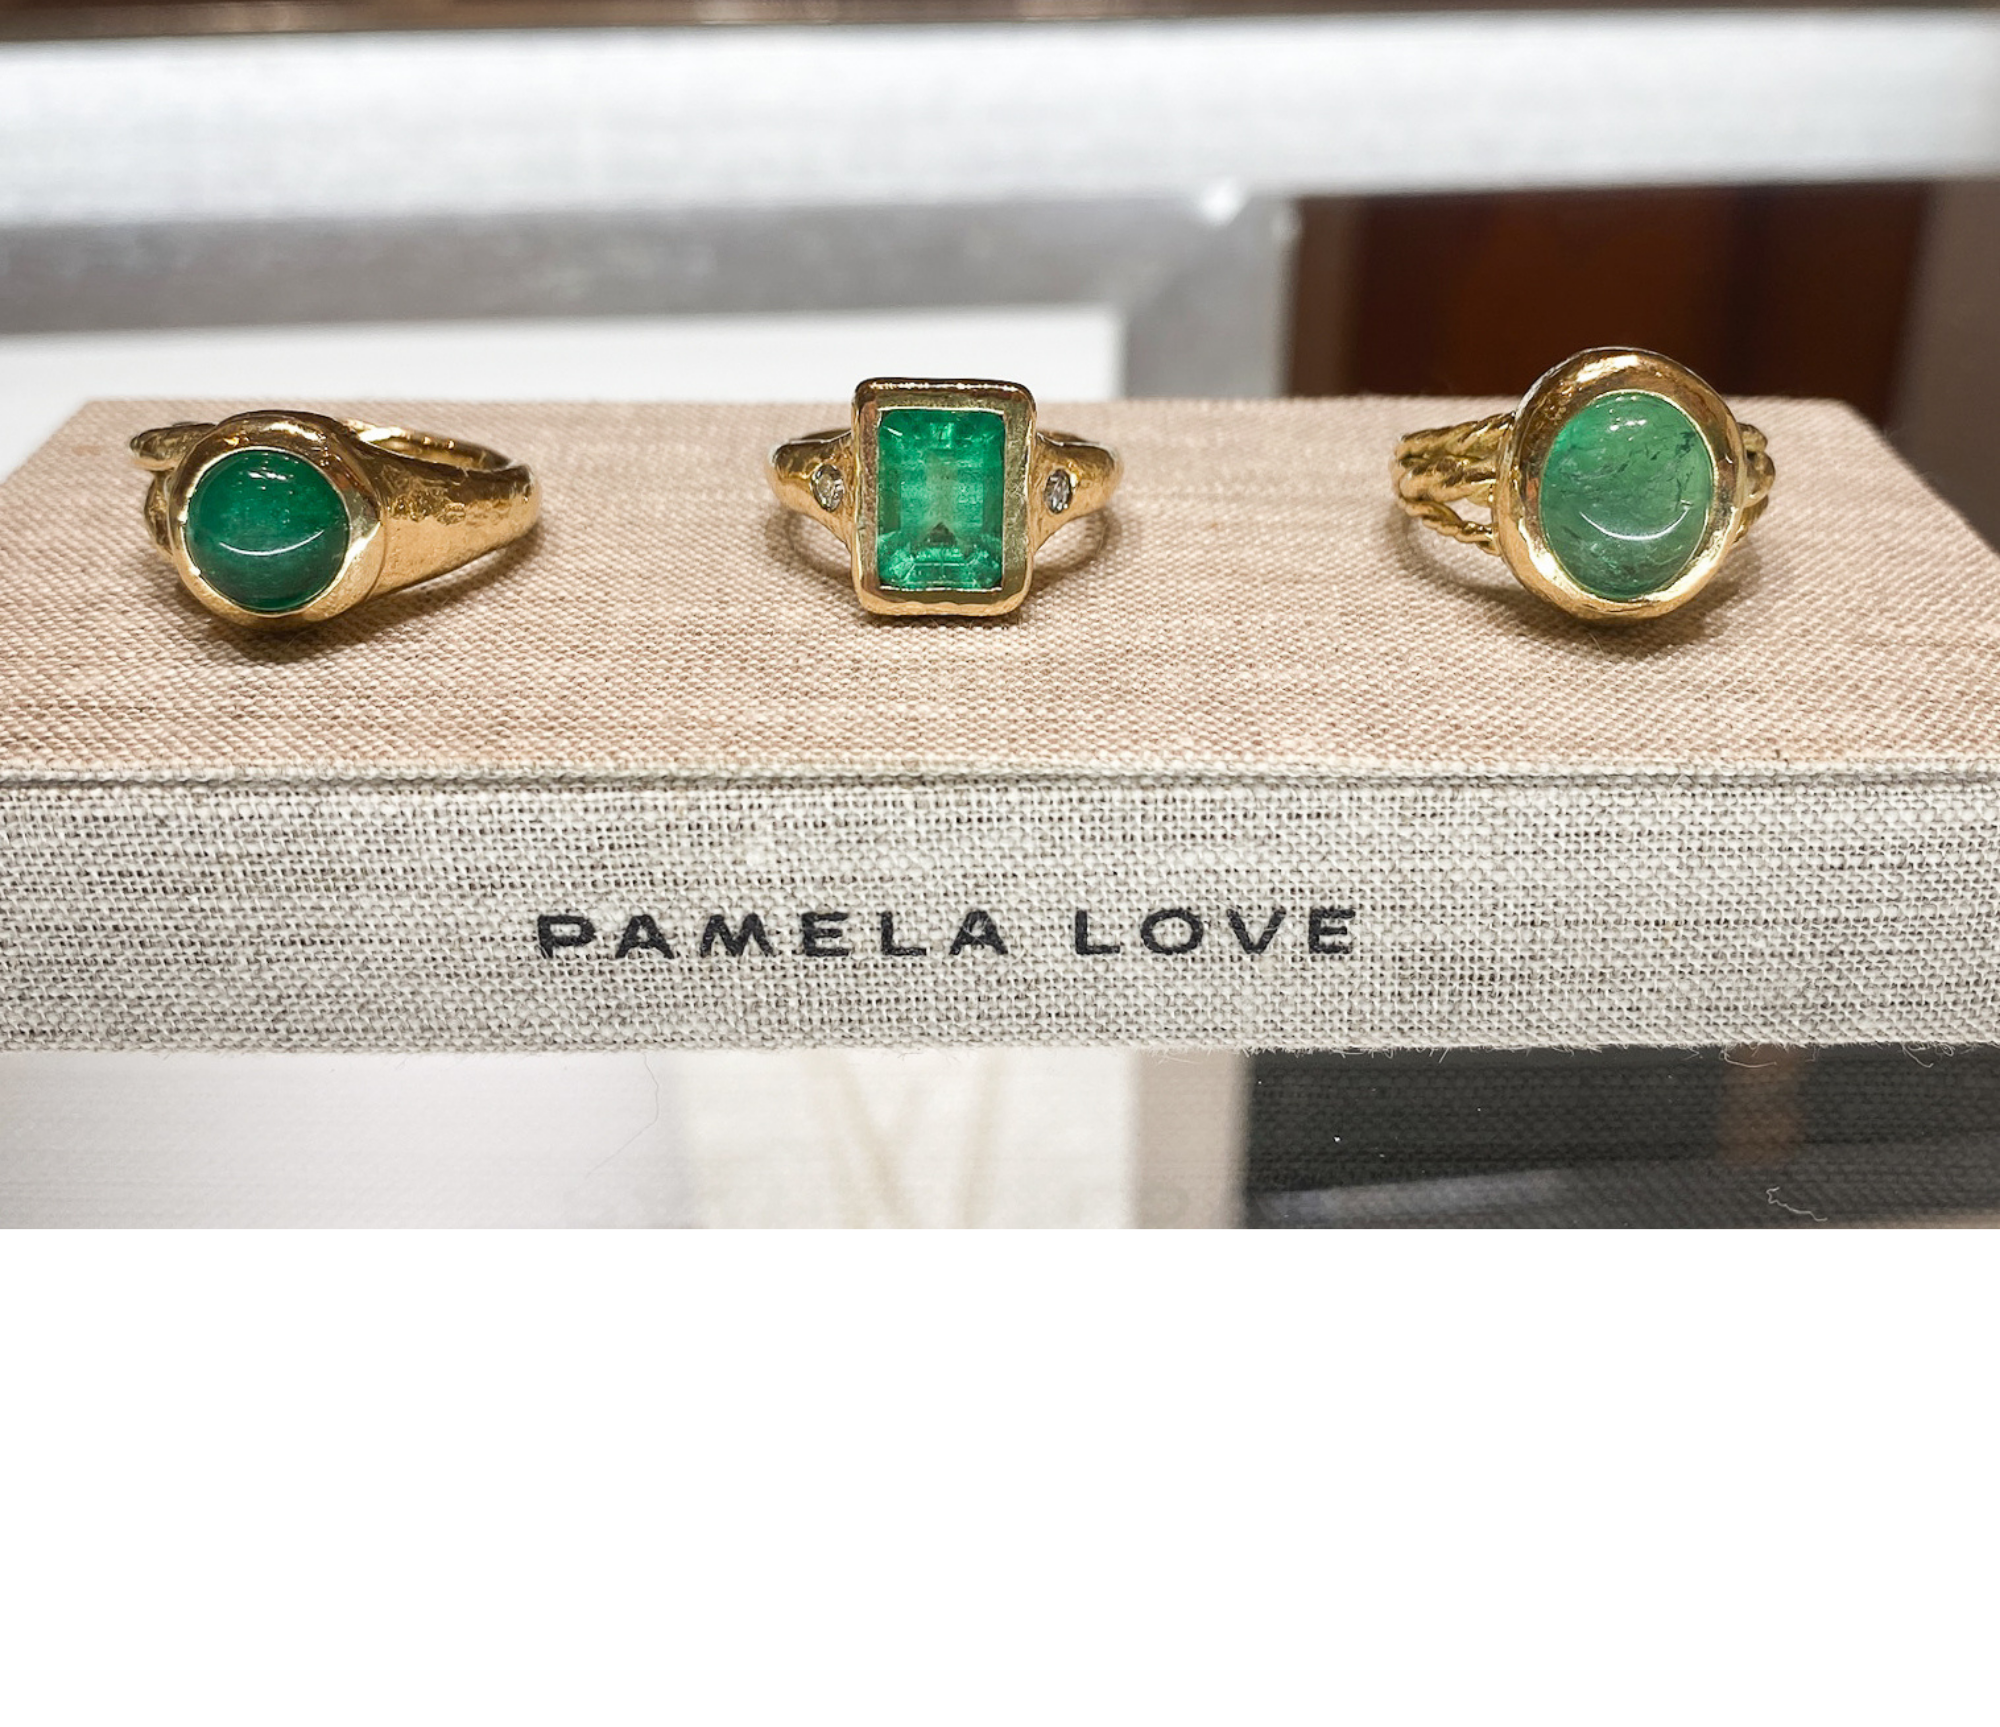 Emerald rings coming soon to Muzo/Pamela Love